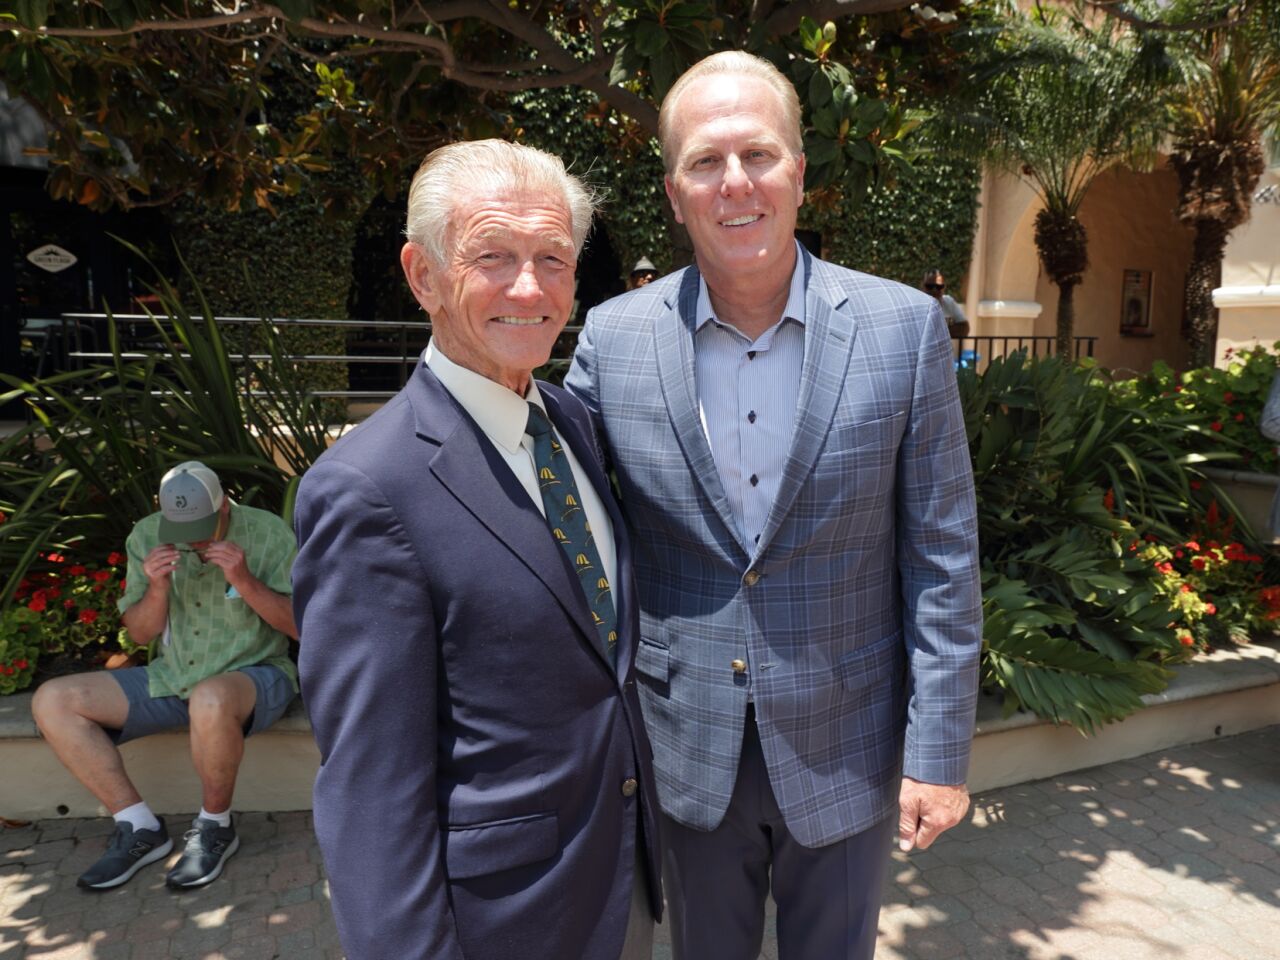 Del Mar Thoroughbred Club CEO Joe Harper with former San Diego Mayor Kevin Faulconer